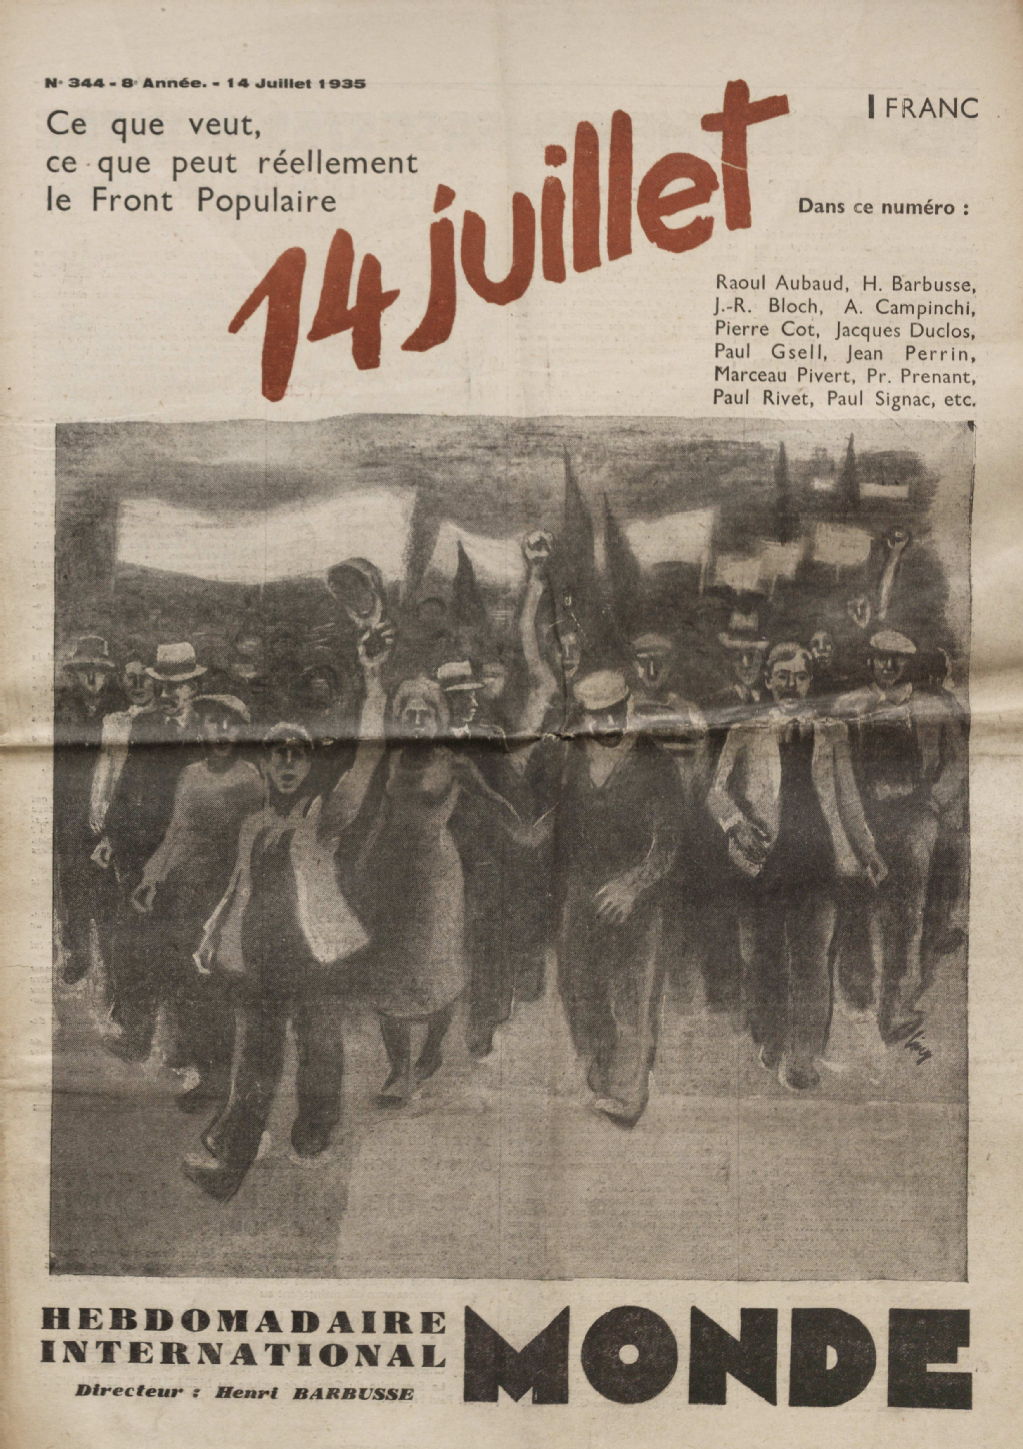 '14 Juillet [14 July]', 1935